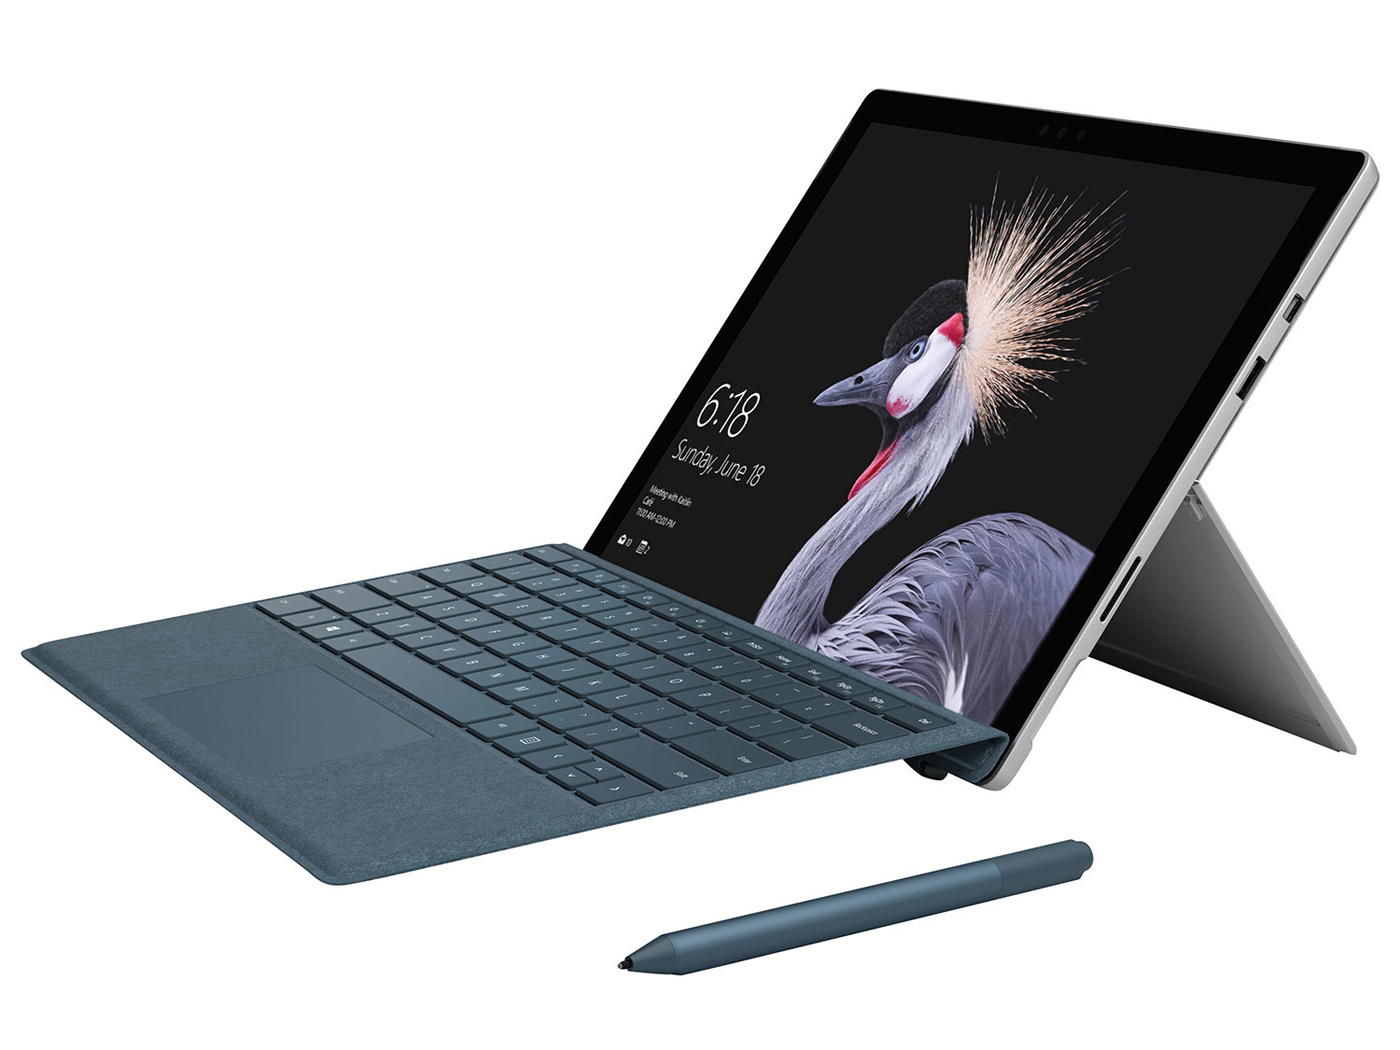 Microsoft Surface Pro (2017) i7 - Notebookcheck.net External Reviews